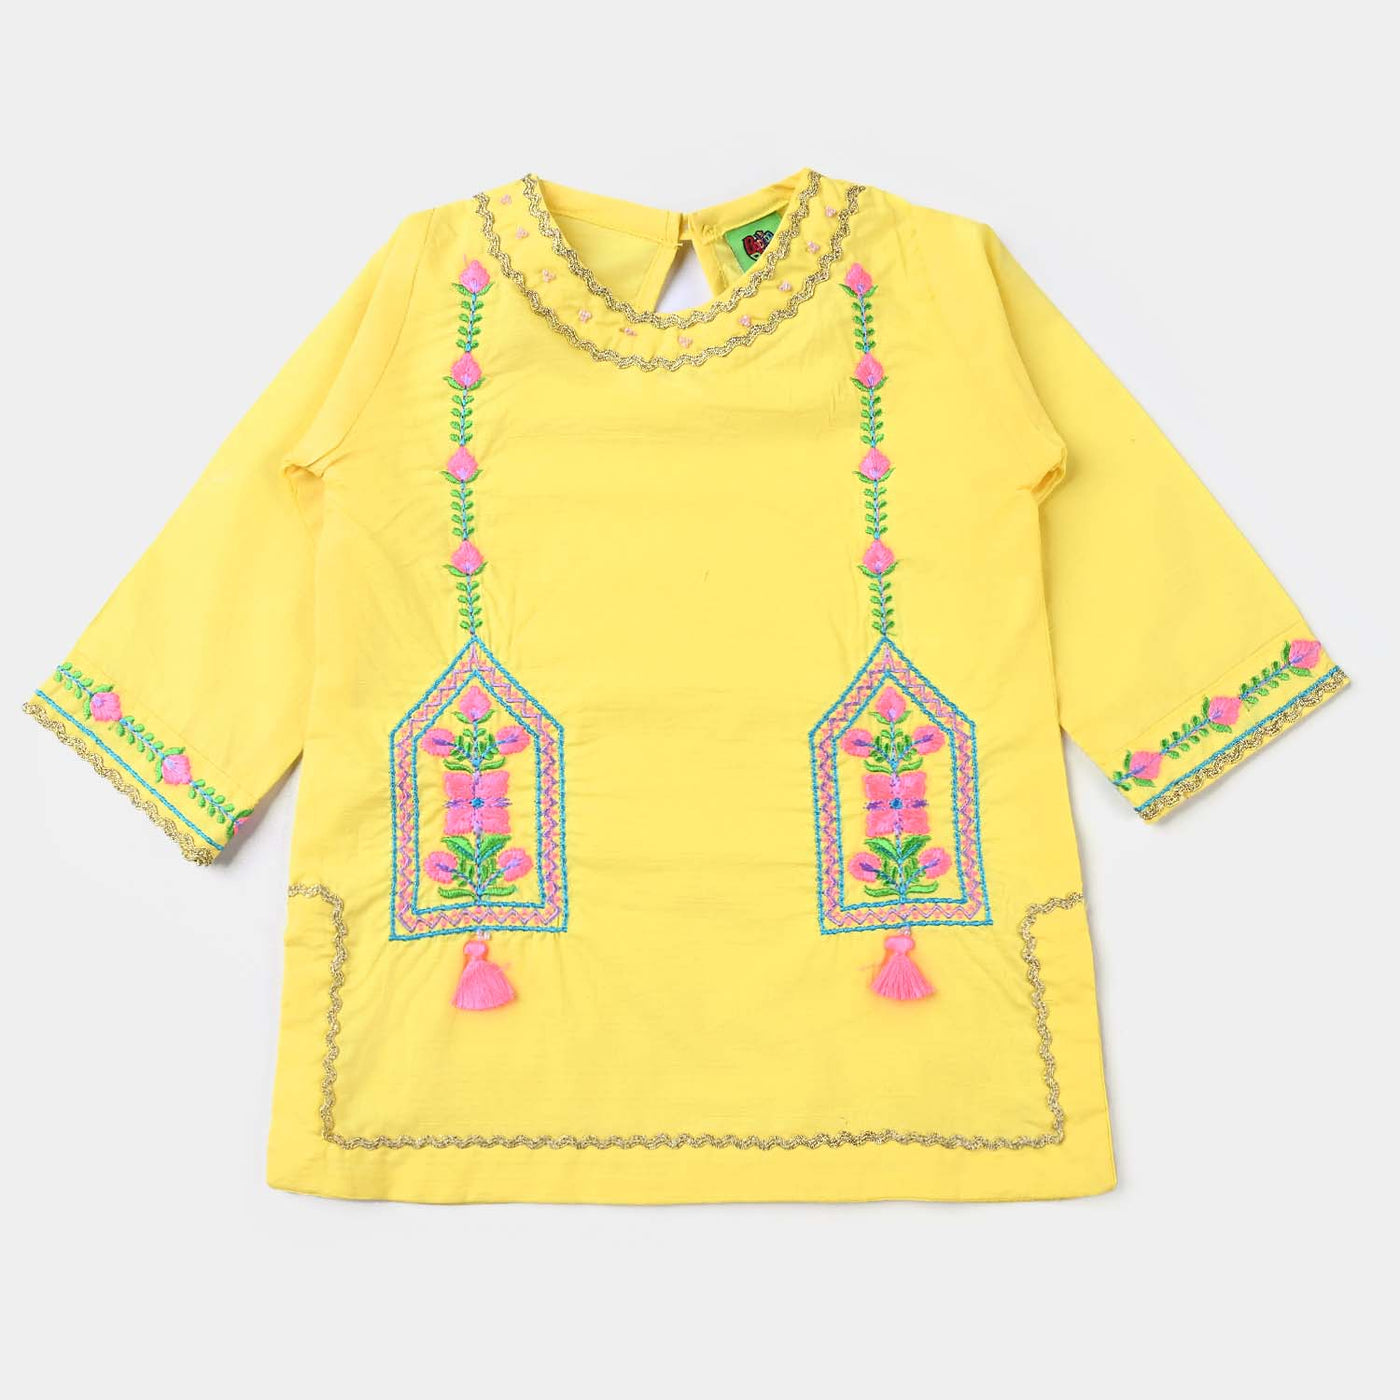 Infant Girls Cotton Slub EMB 2PC Suit Neon Garden-B.Yellow